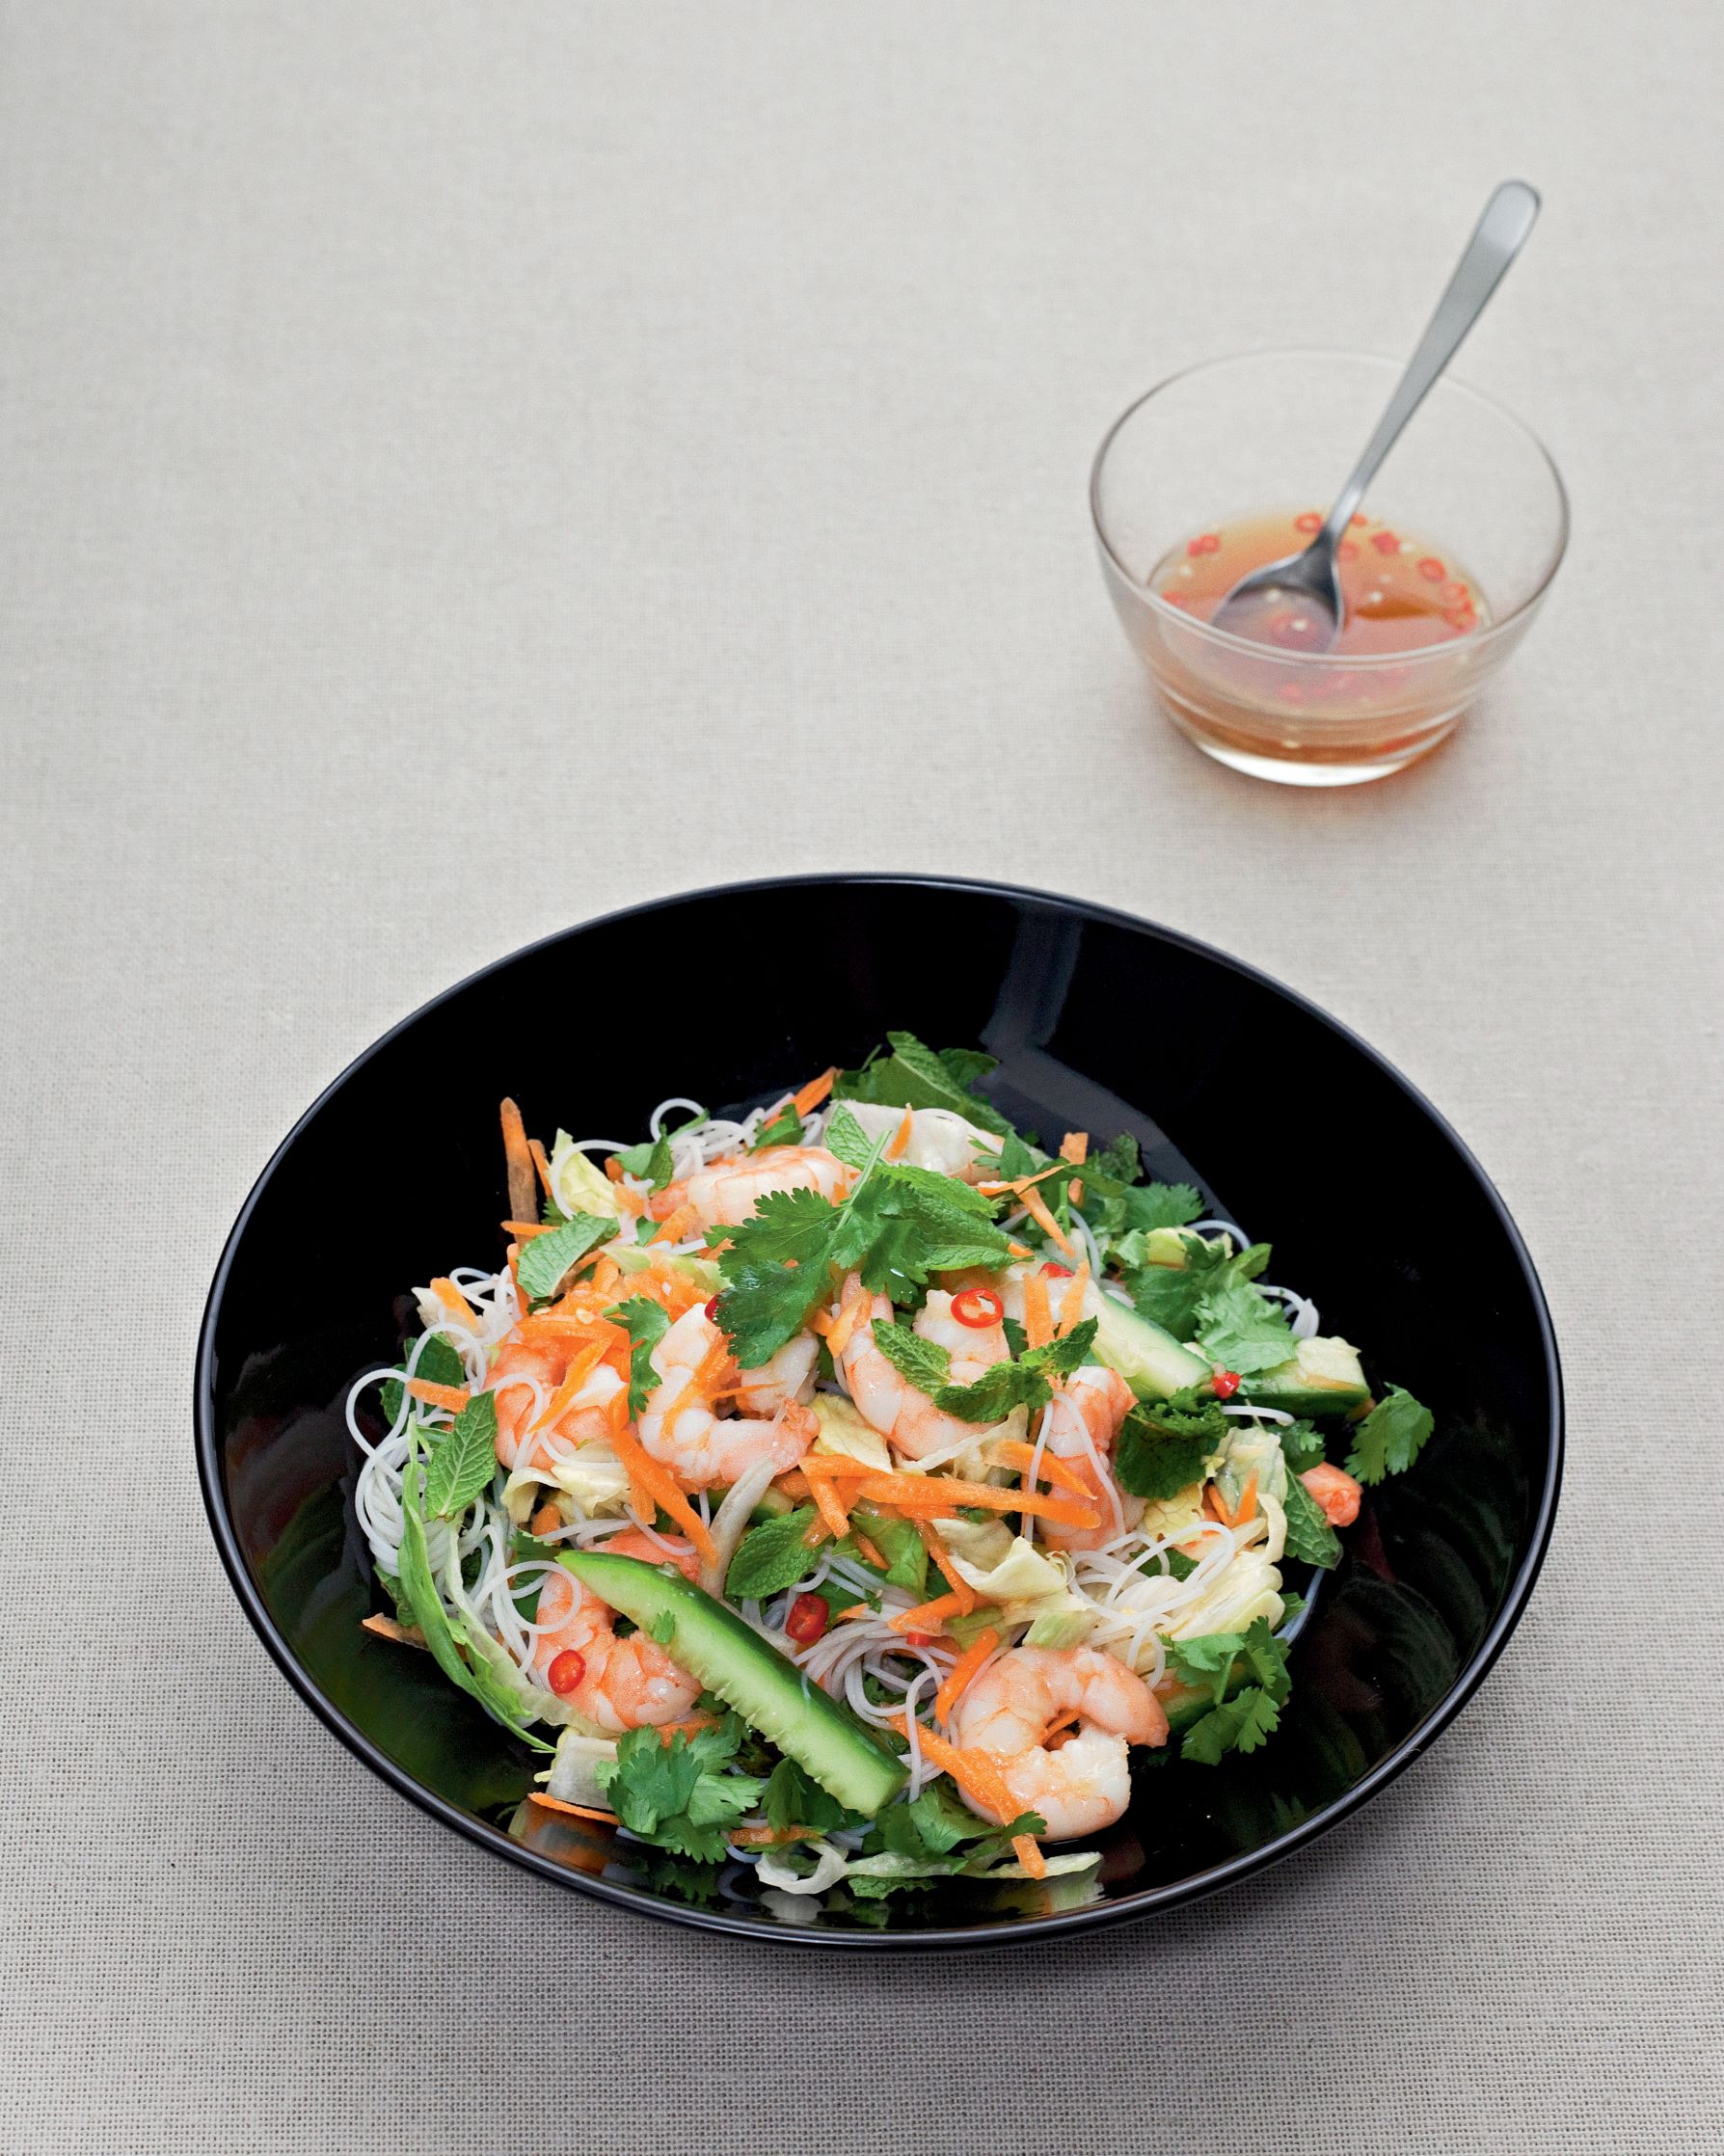  Vietnamese Herb & Noodle Salad with Shrimp